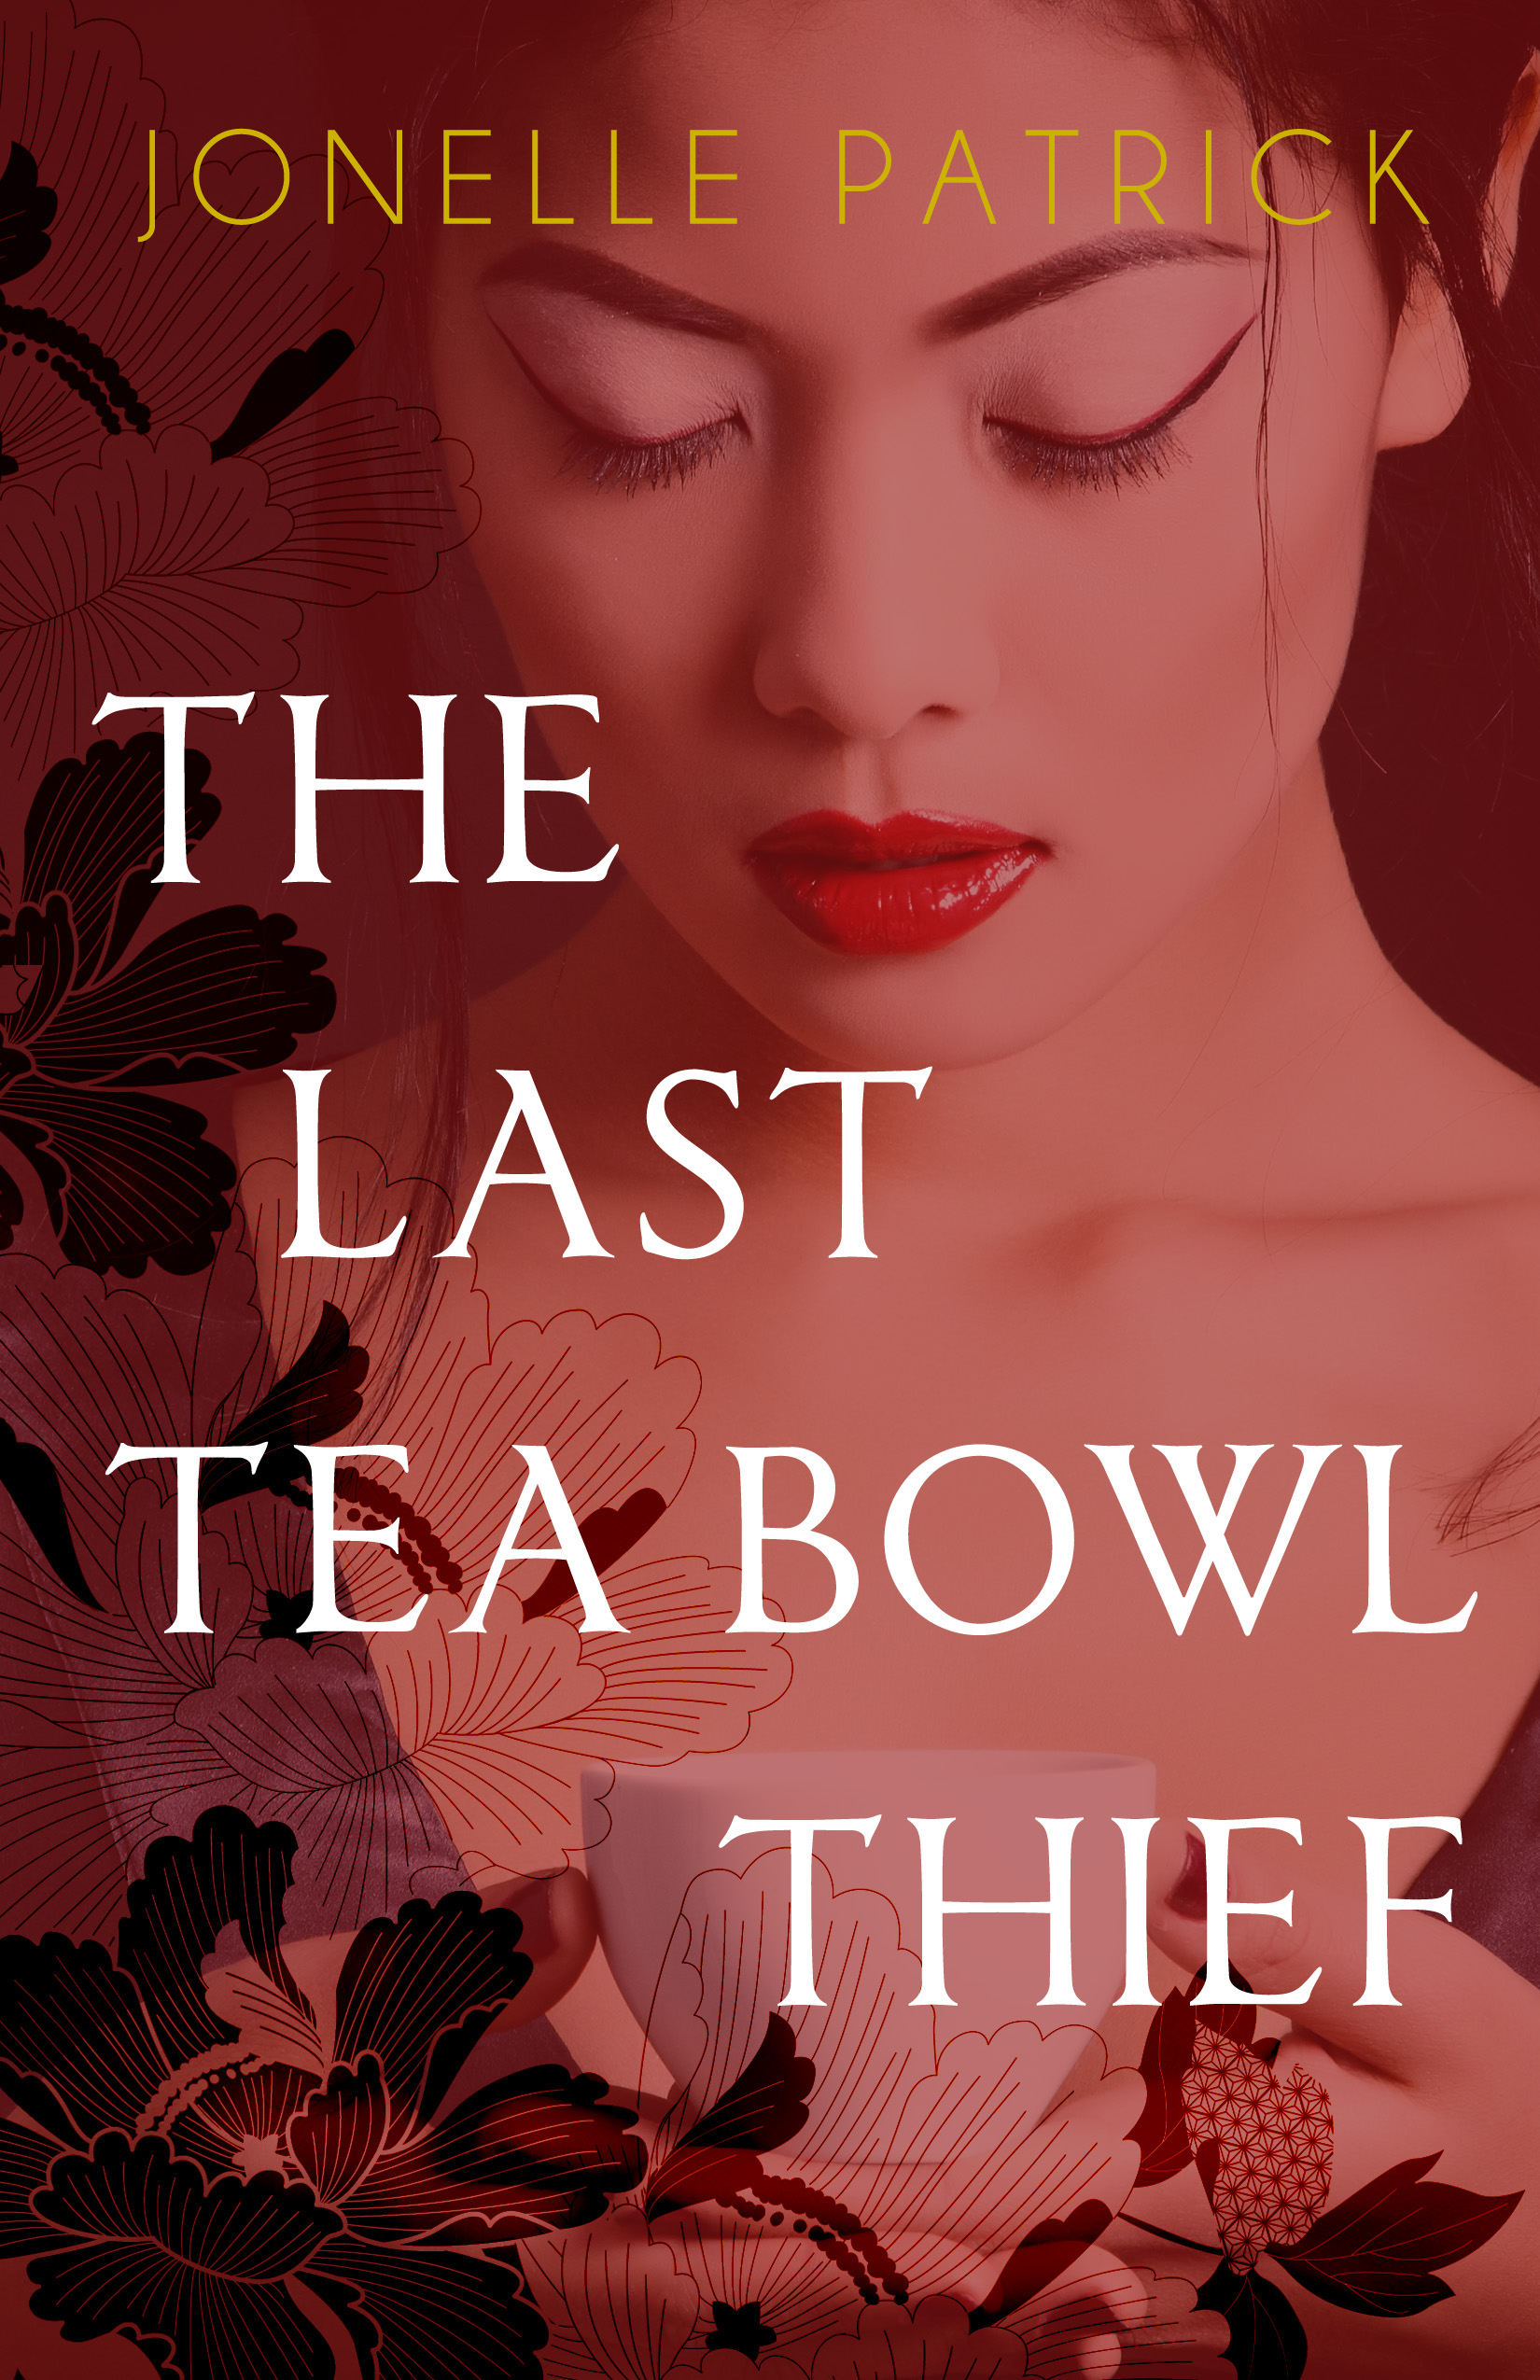 The Last Tea Bowl Thief